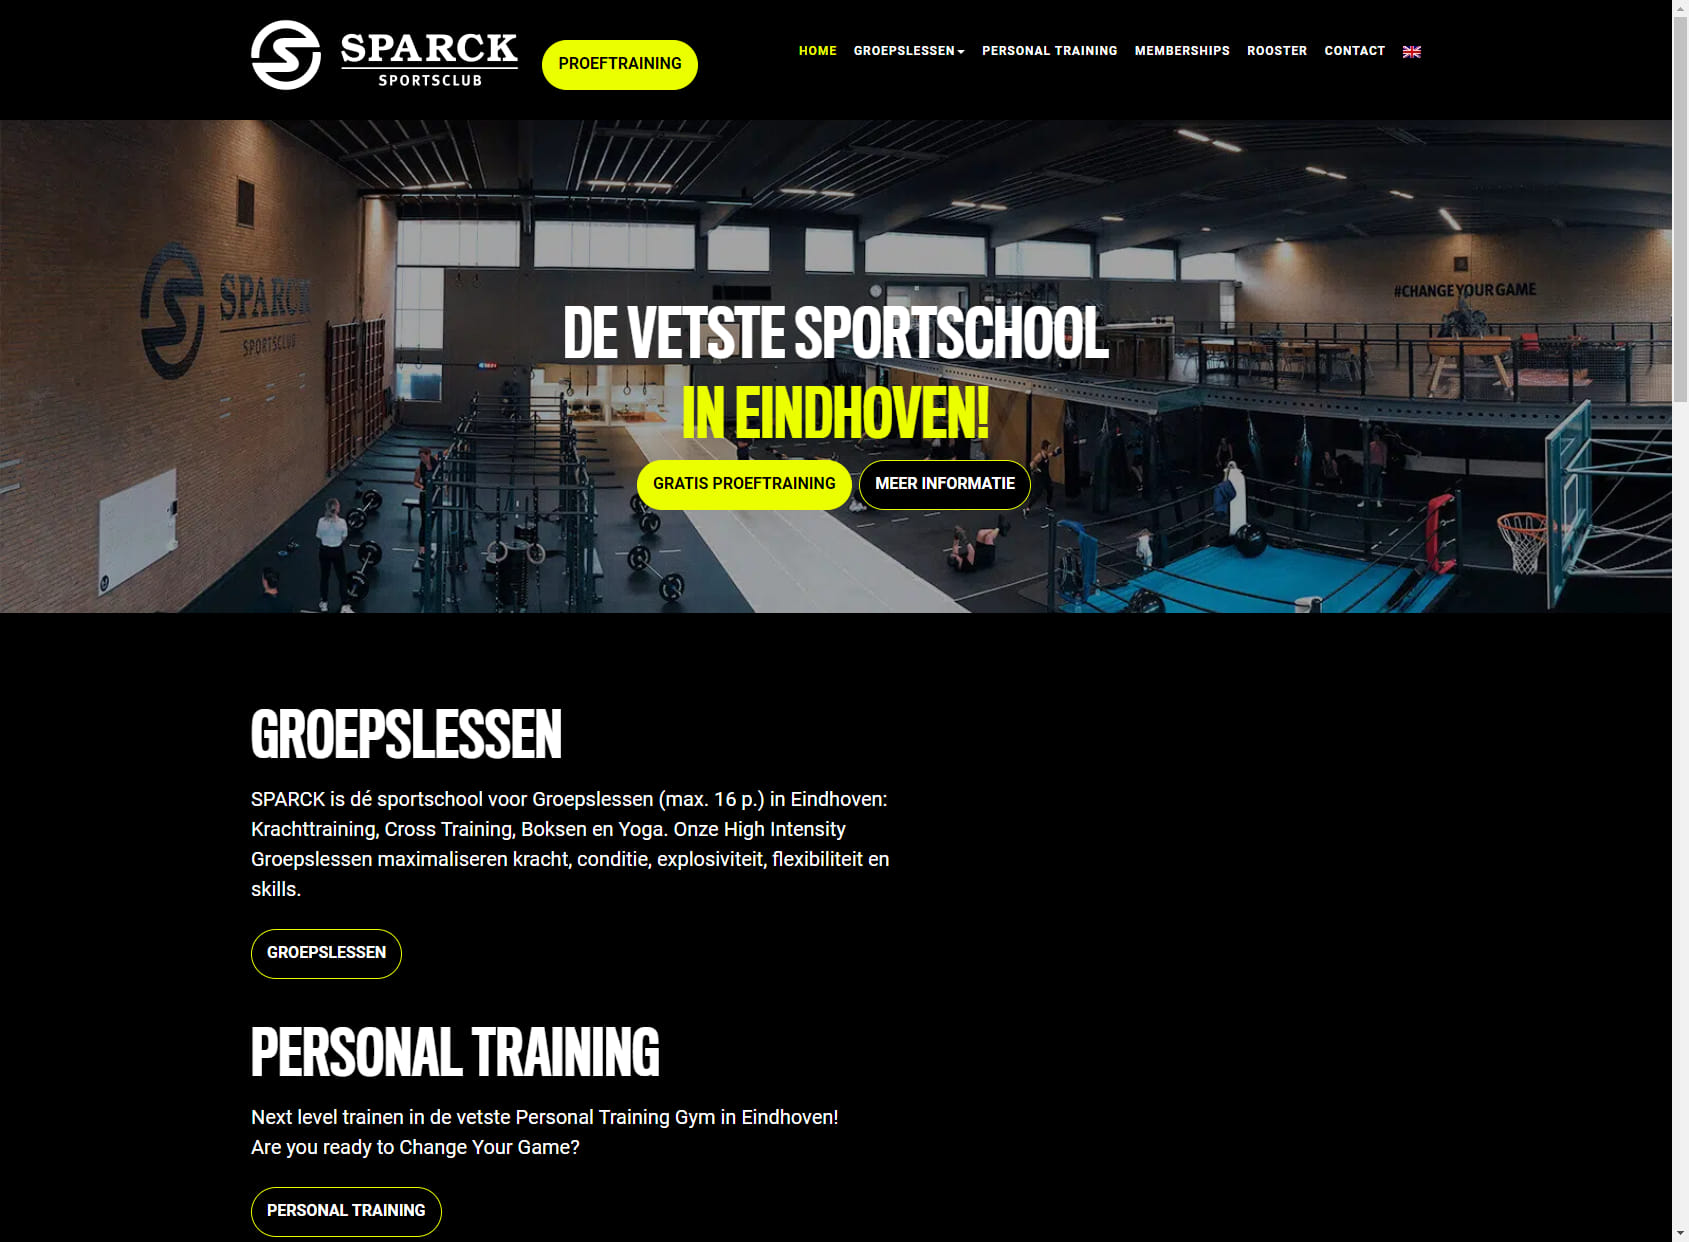 SPARCK sportsclub: de vetste sportschool in Eindhoven!